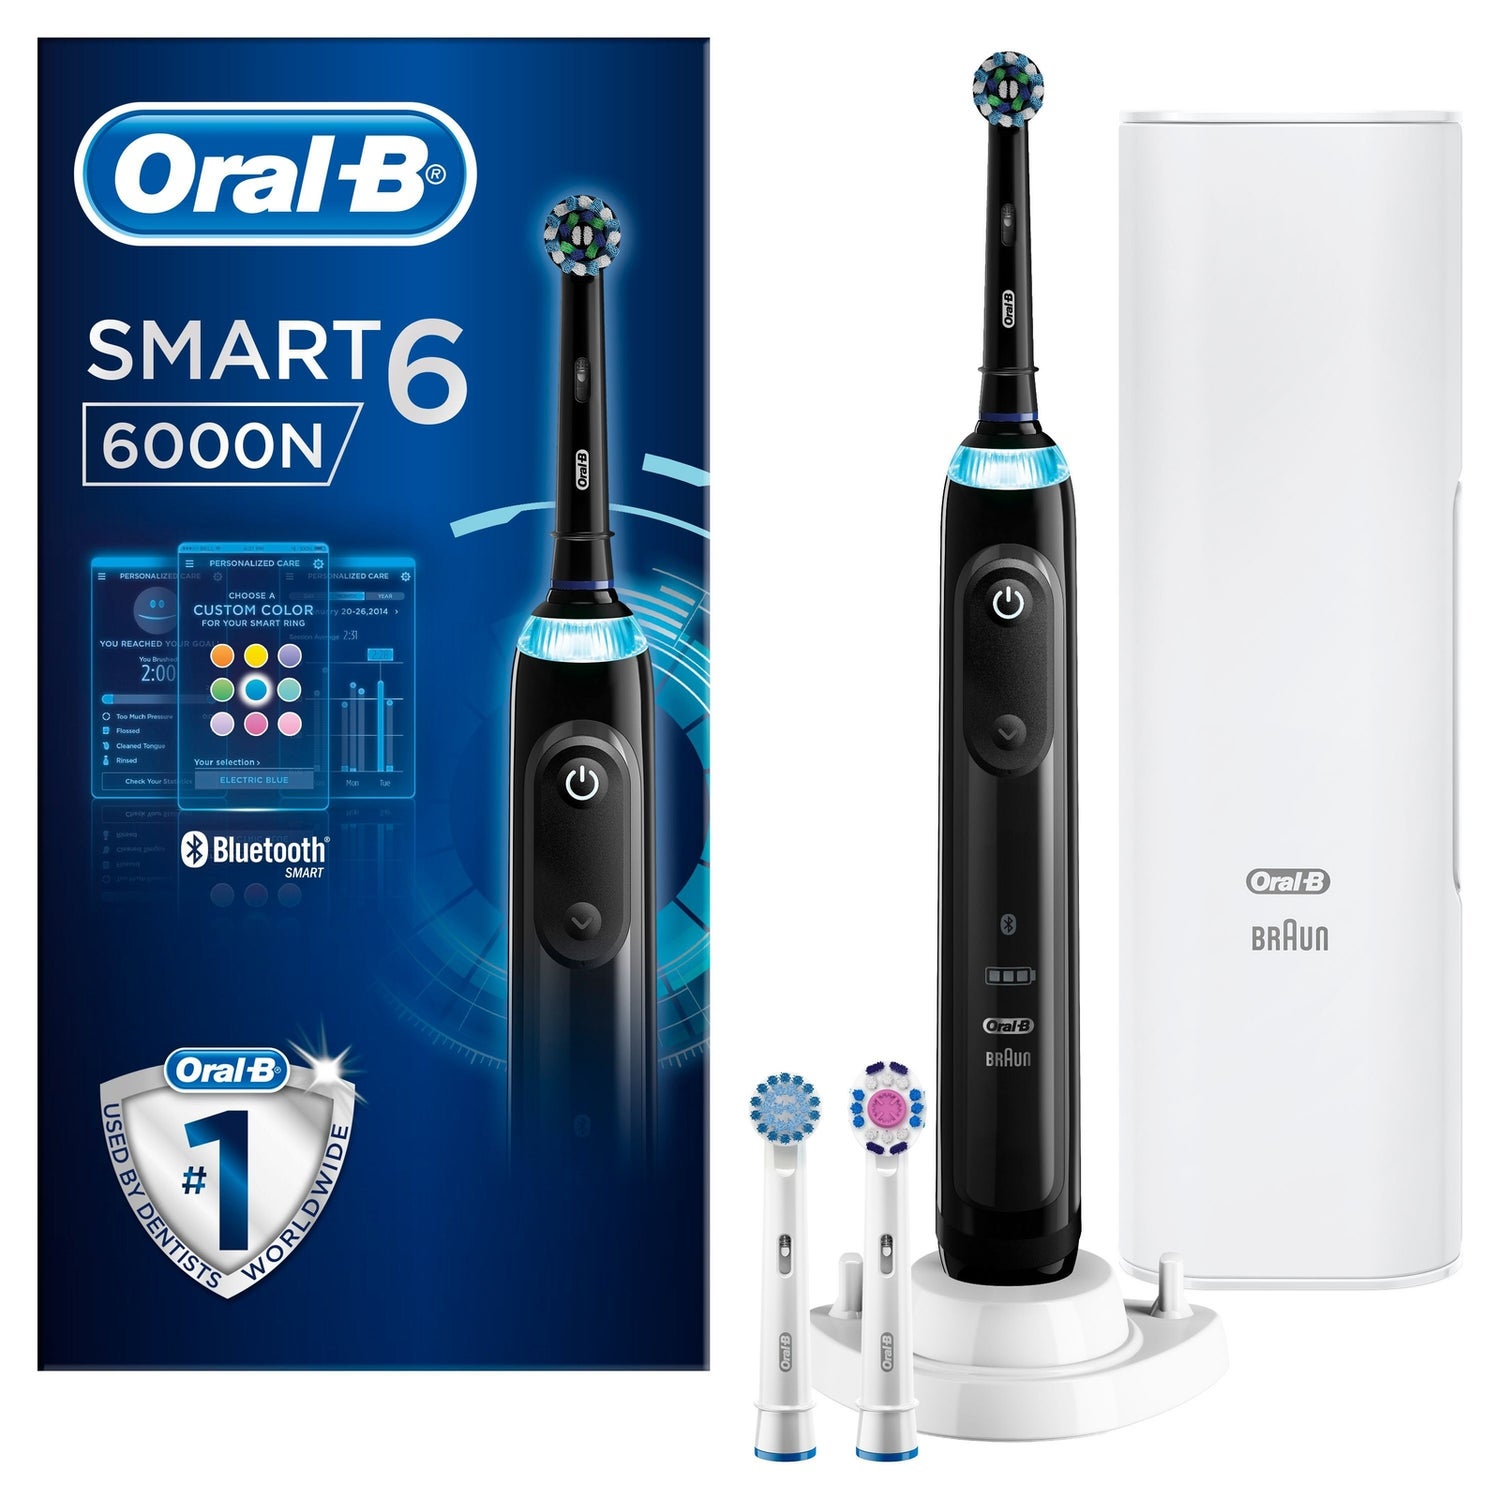 Oral-B Smart 6 Black Electric Toothbrush